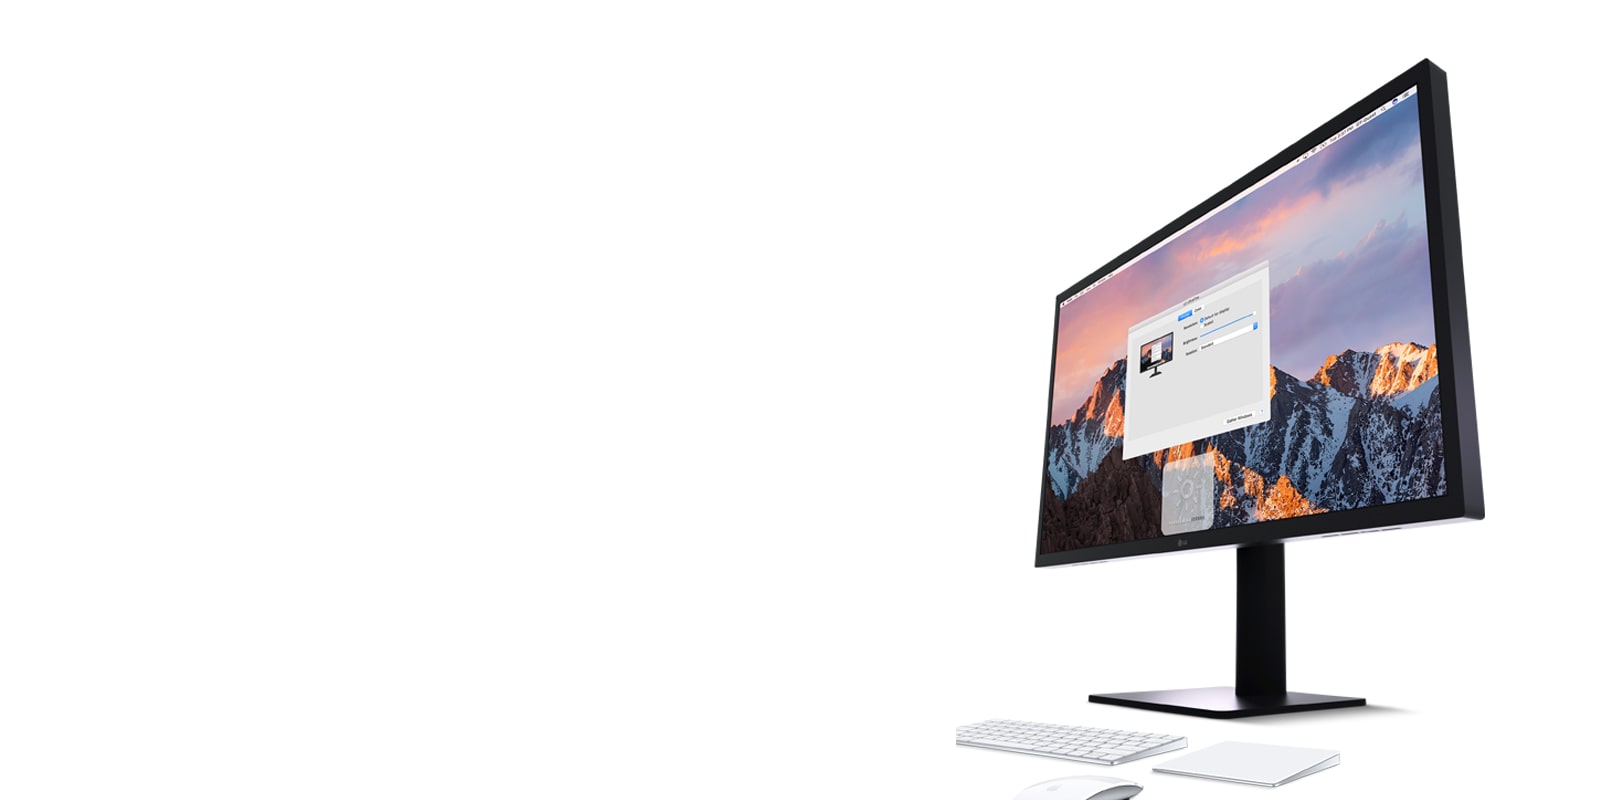  LG Monitor LED UltraFine 5K IPS para MacBook Pro, negro, 27  (renovado) : Electrónica